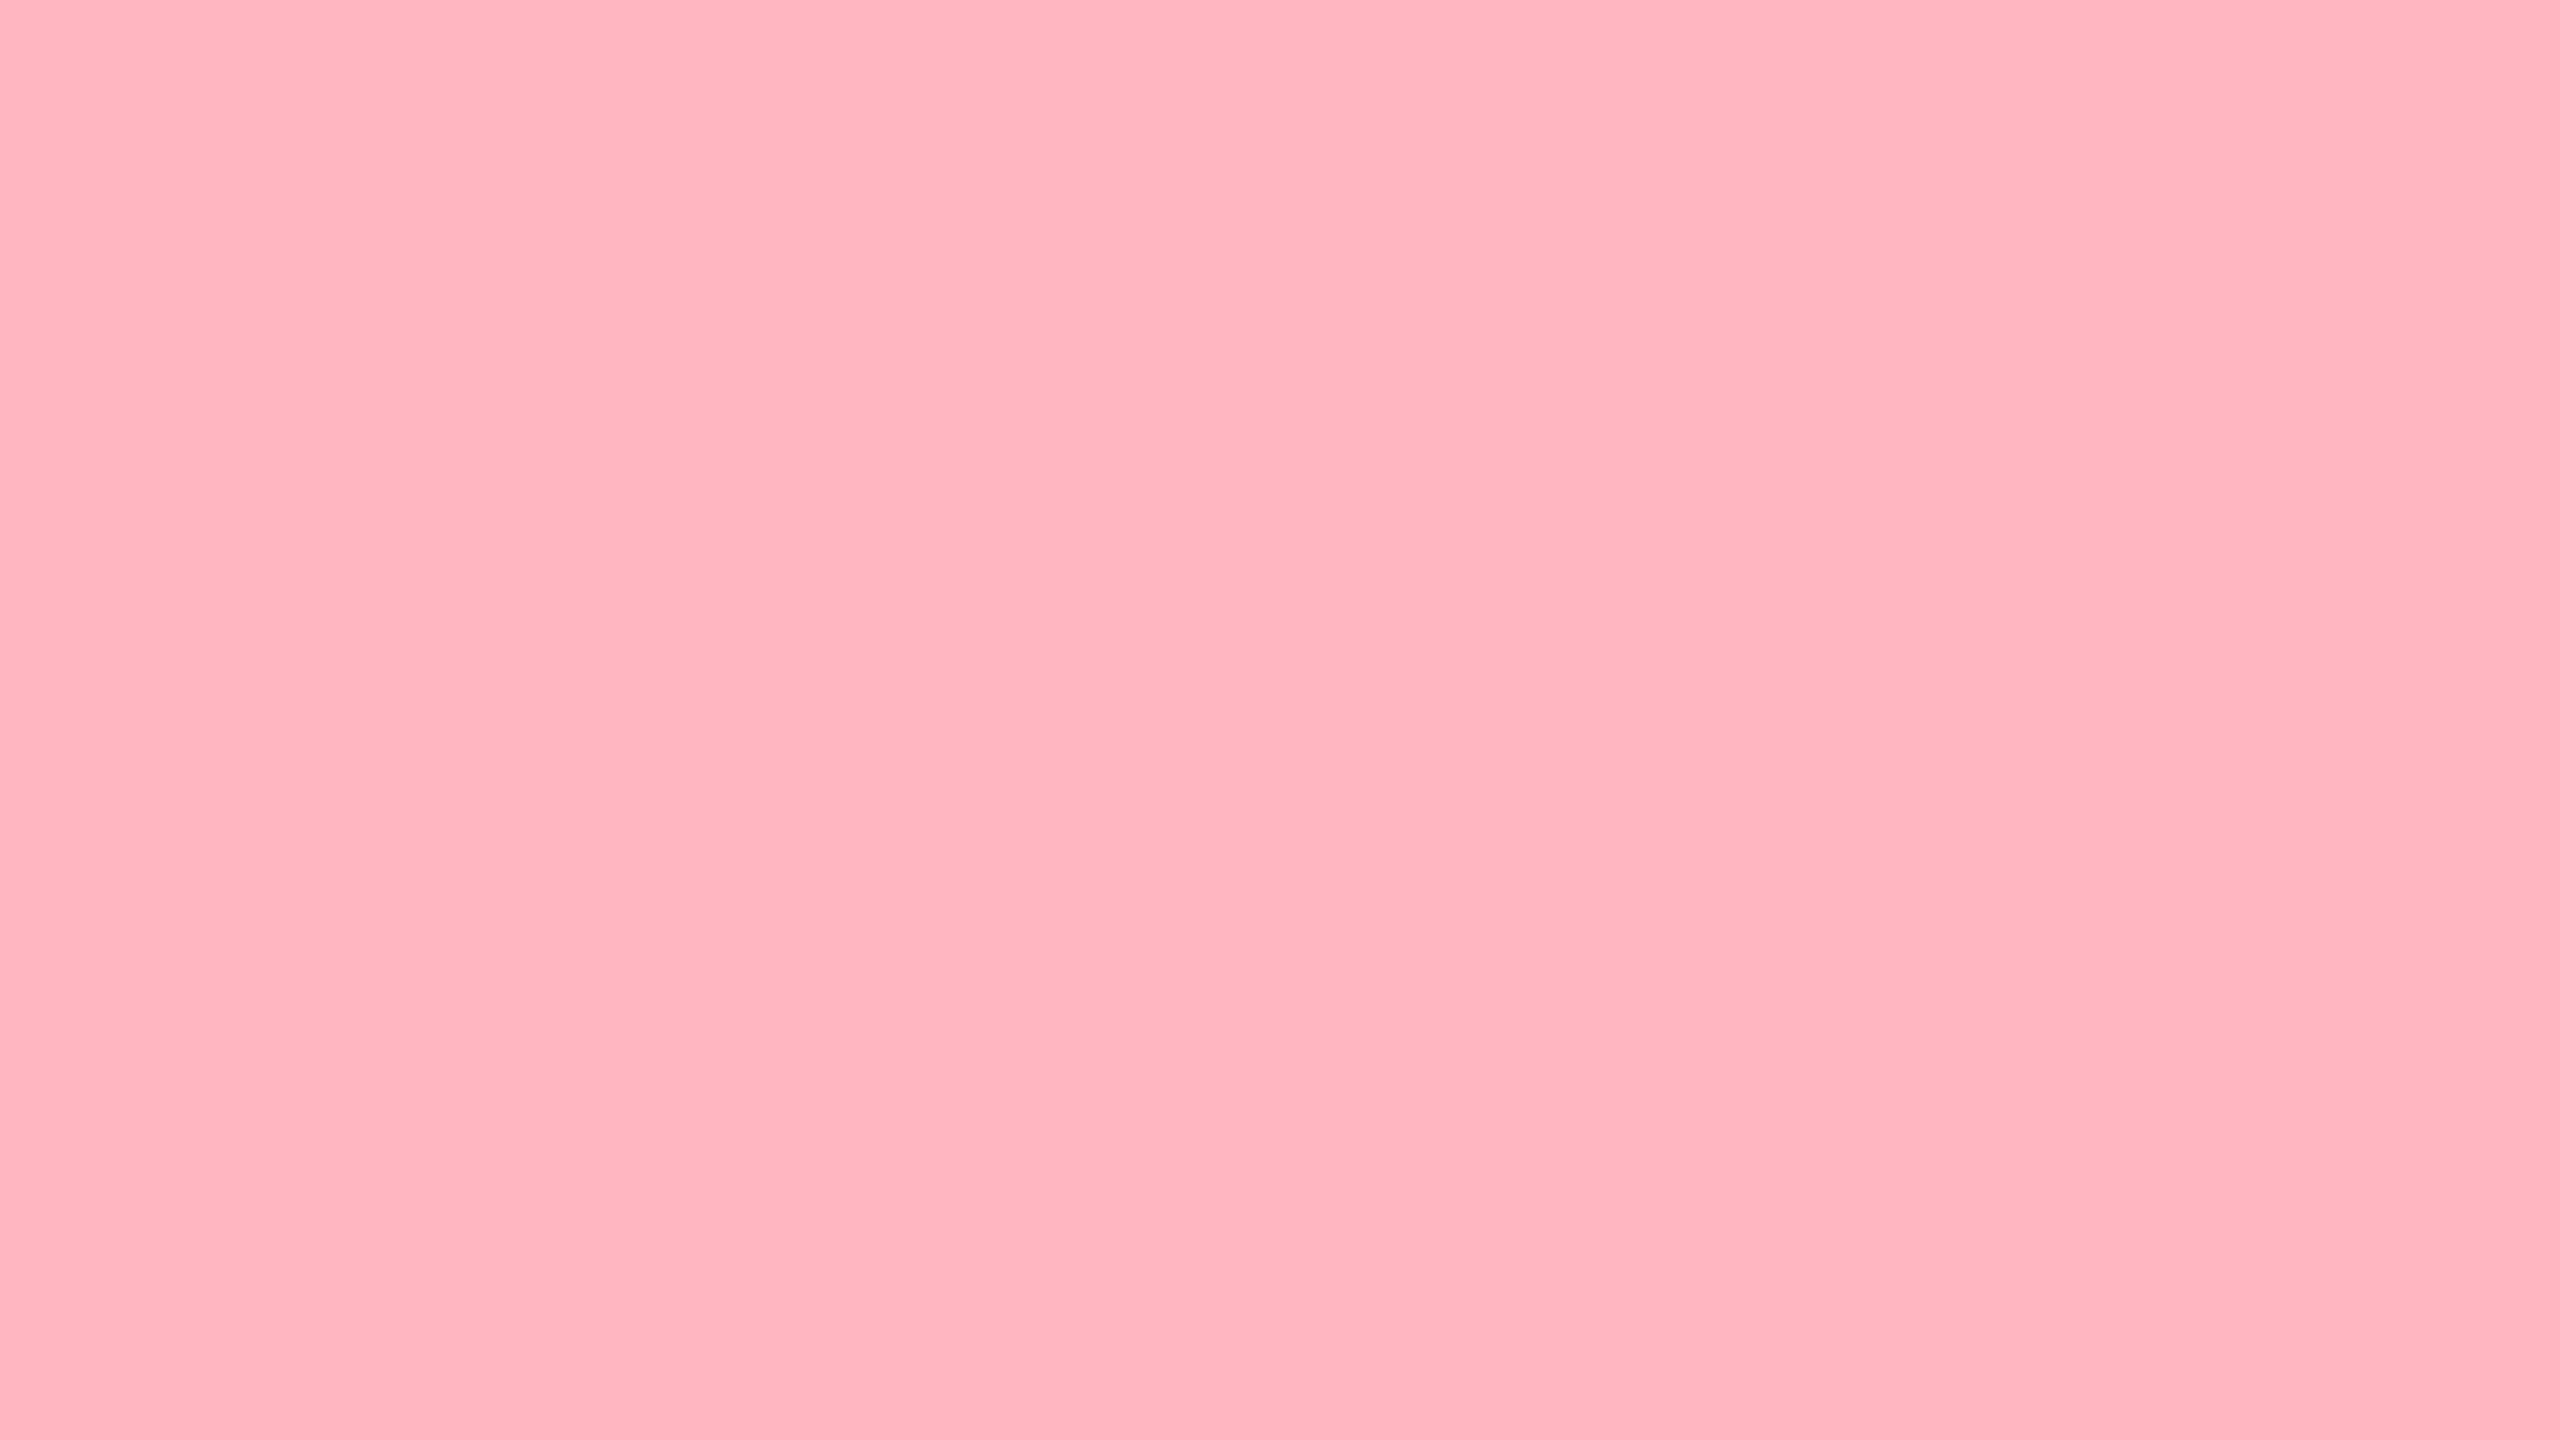 Tumblr Backgrounds Light Pink HD Wallpapers on picsfaircom 2560x1440